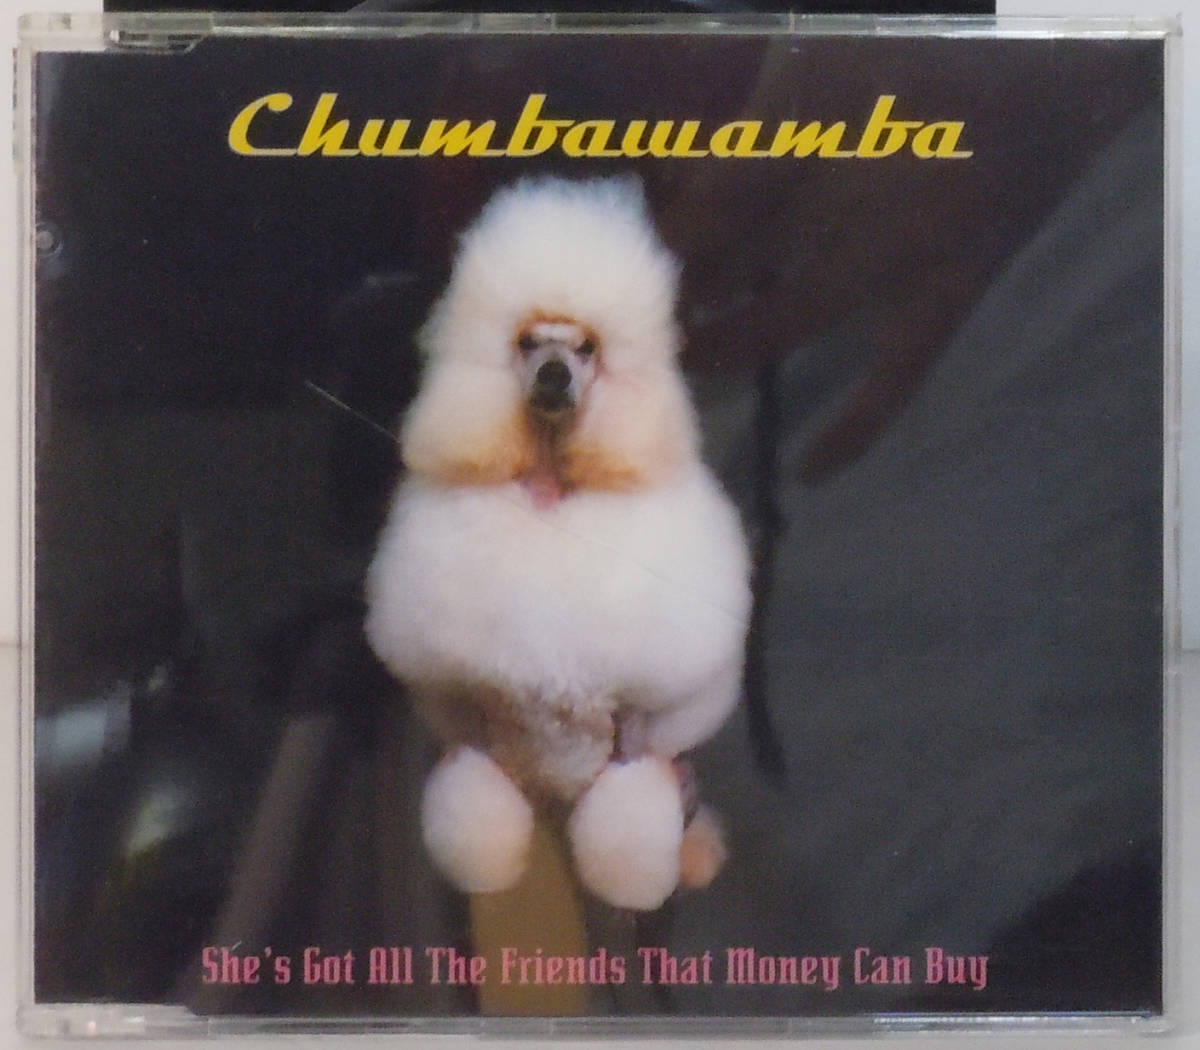 CD ● Chumbawamba / She's Got All the Friends ●7243 8 88206 2 2 チャンバワンバ A862_画像1